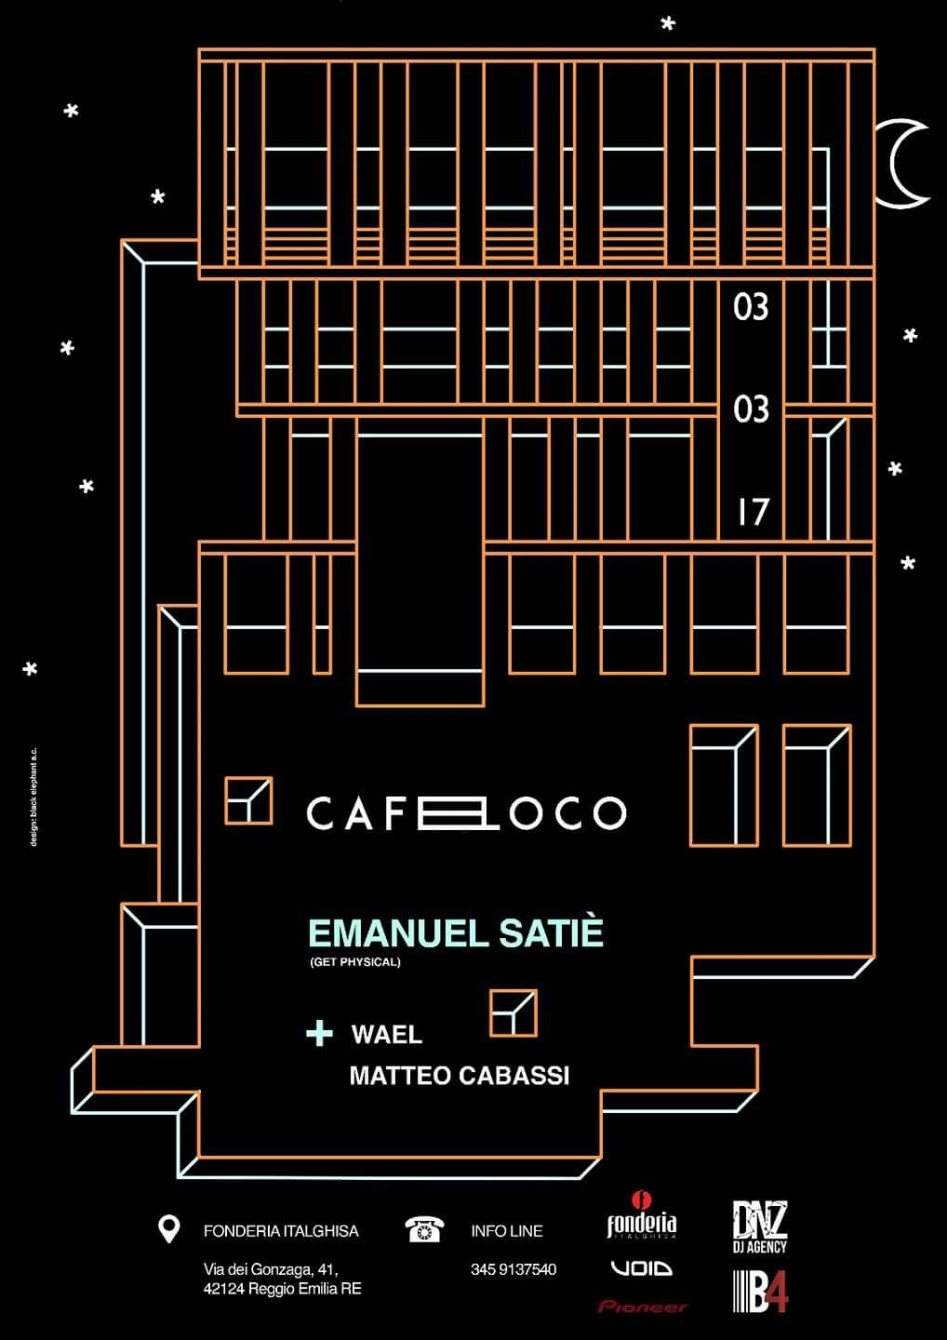 Cafe Loco with Emanuel Satie, Matteo Cabassi & Wael - フライヤー表